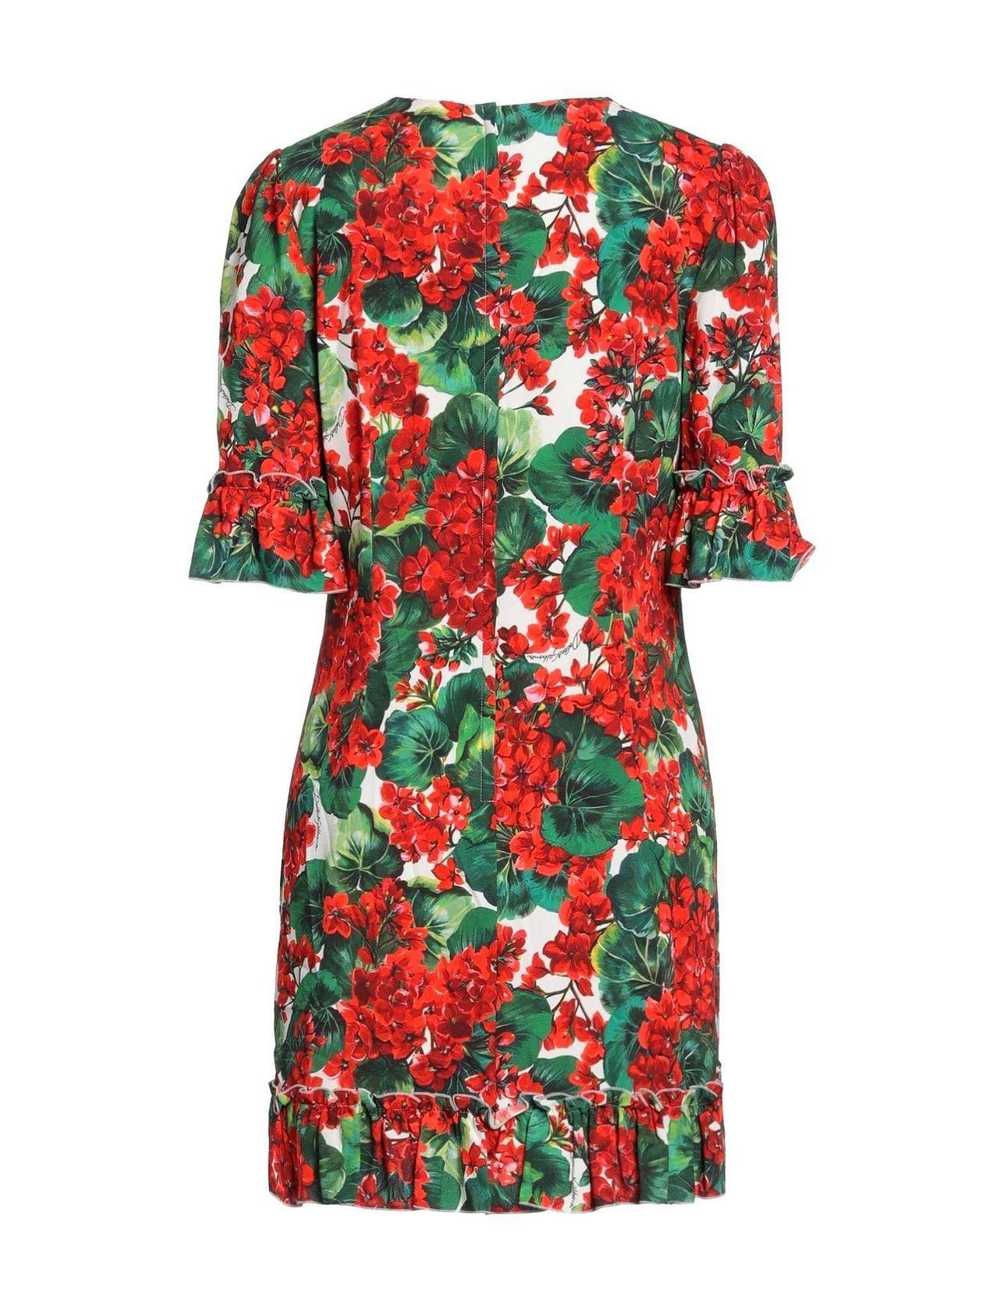 Dolce & Gabbana Geranium Print Dress - image 2